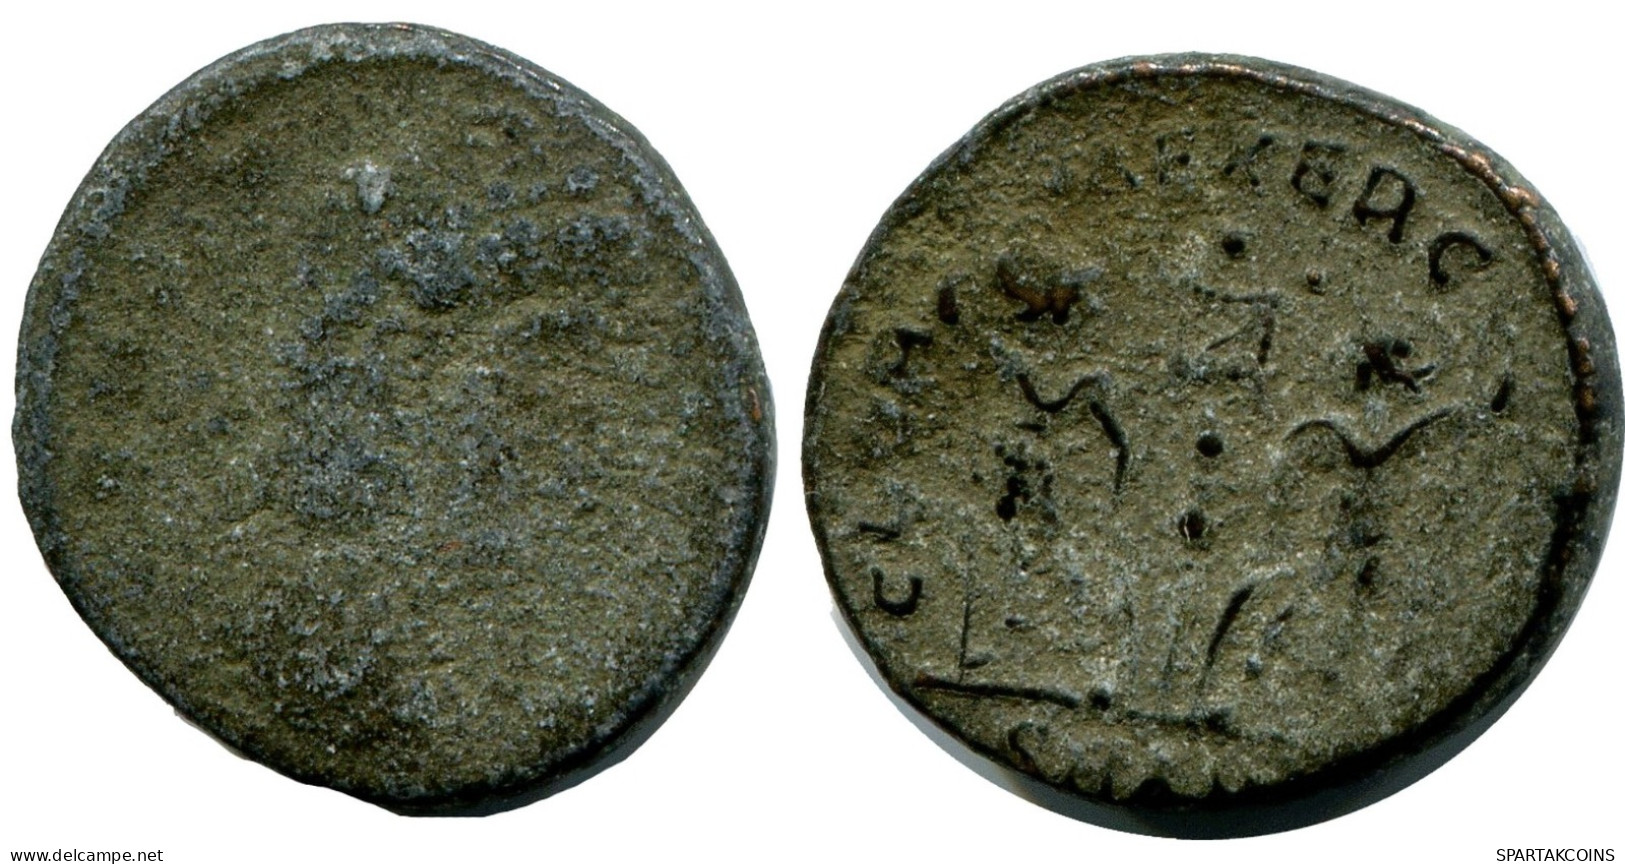 ROMAN Pièce MINTED IN ALEKSANDRIA FOUND IN IHNASYAH HOARD EGYPT #ANC10150.14.F.A - El Imperio Christiano (307 / 363)